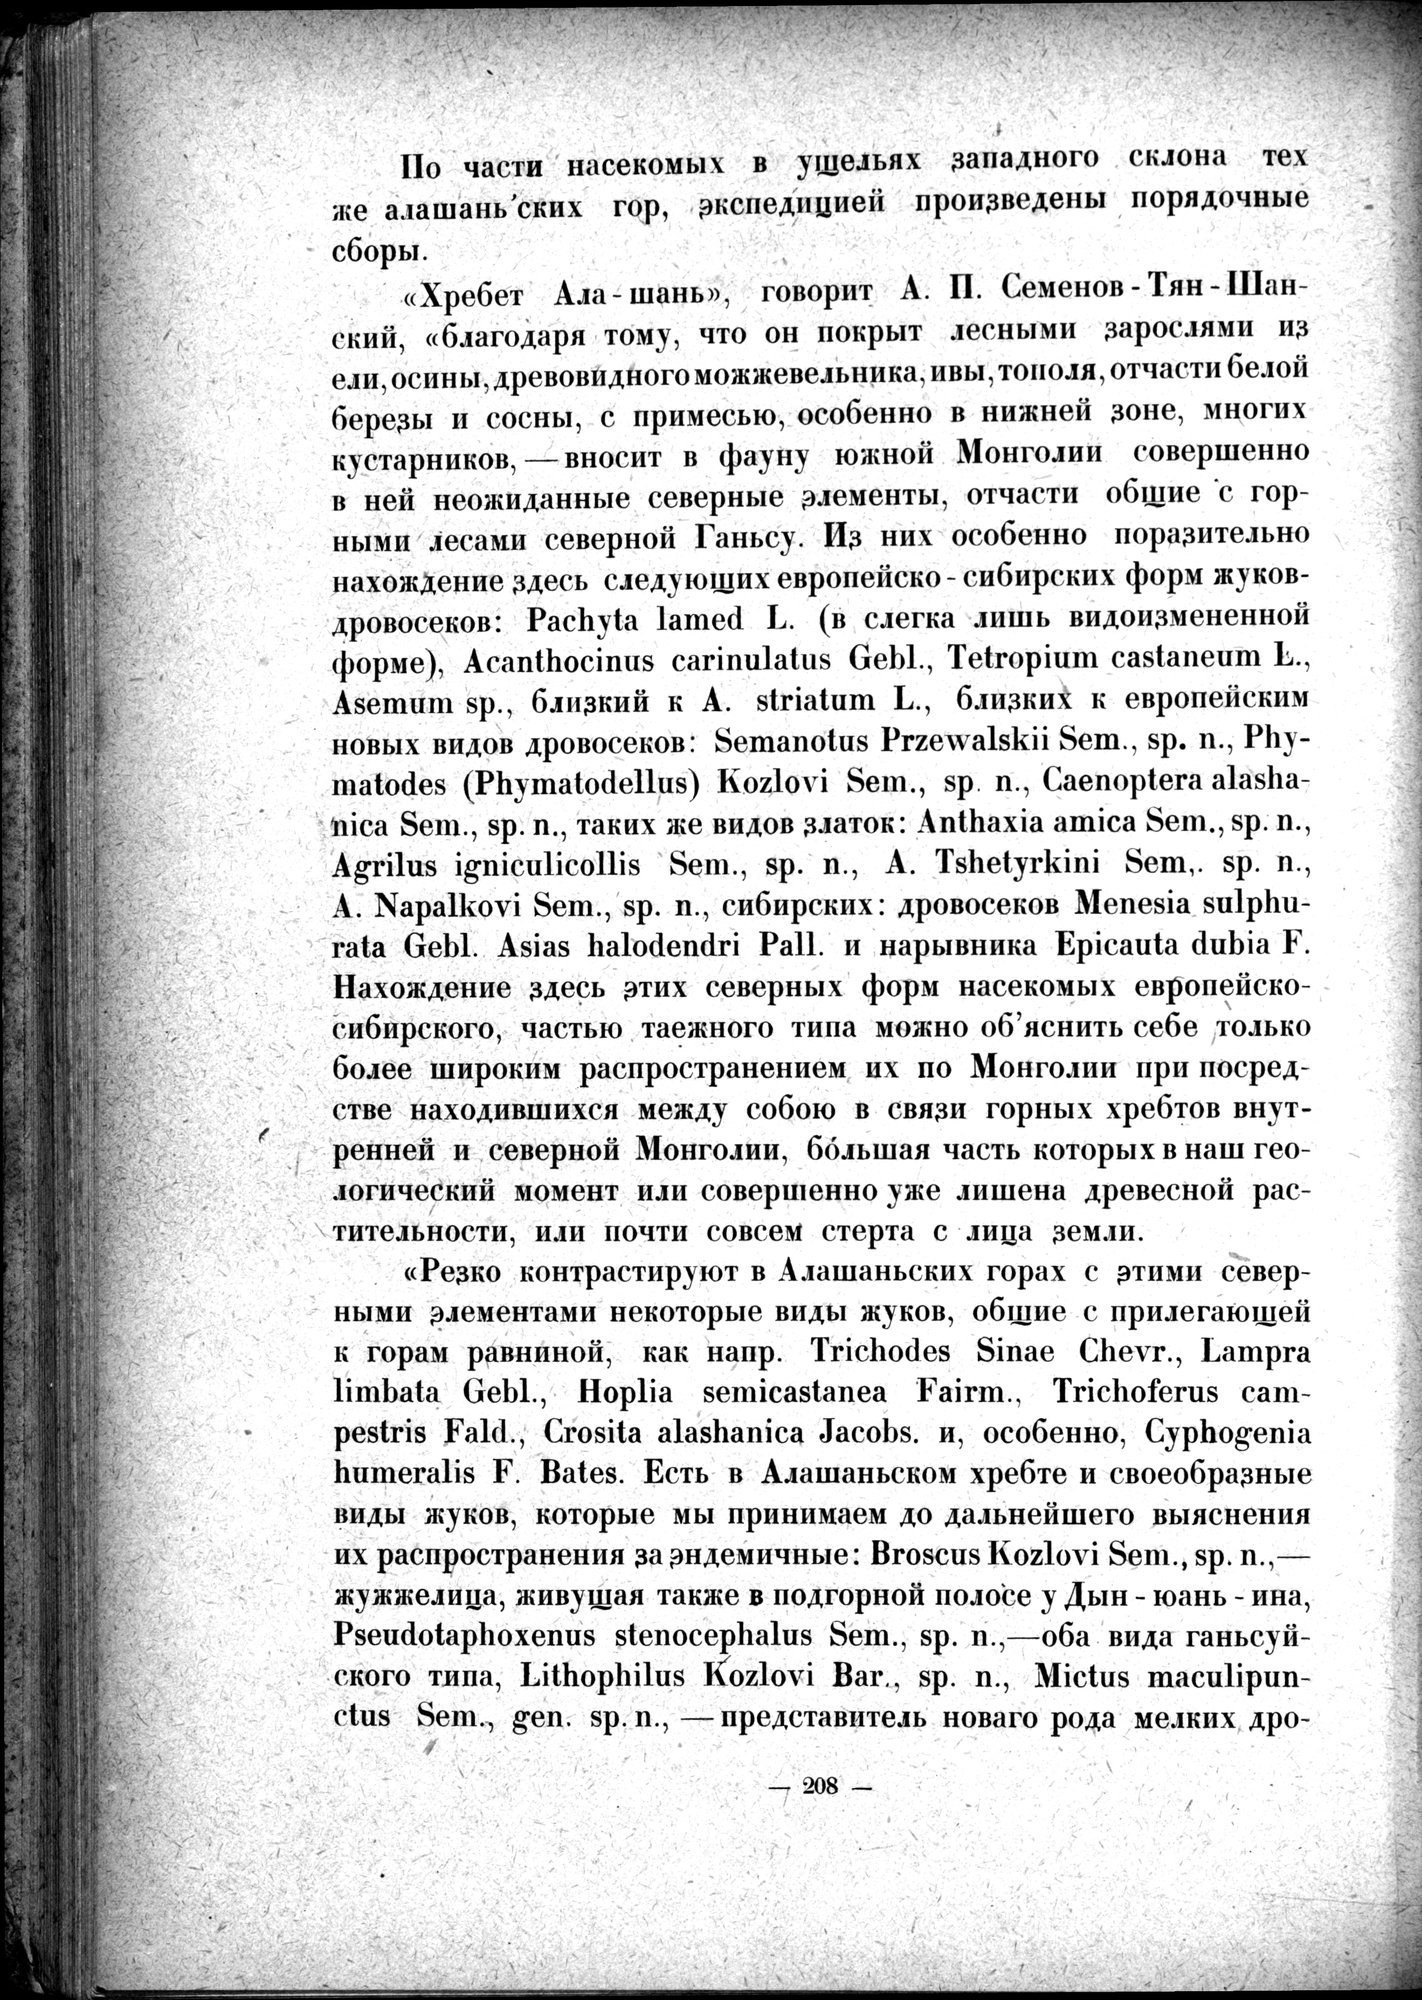 Mongoliya i Amdo i mertby gorod Khara-Khoto : vol.1 / Page 248 (Grayscale High Resolution Image)